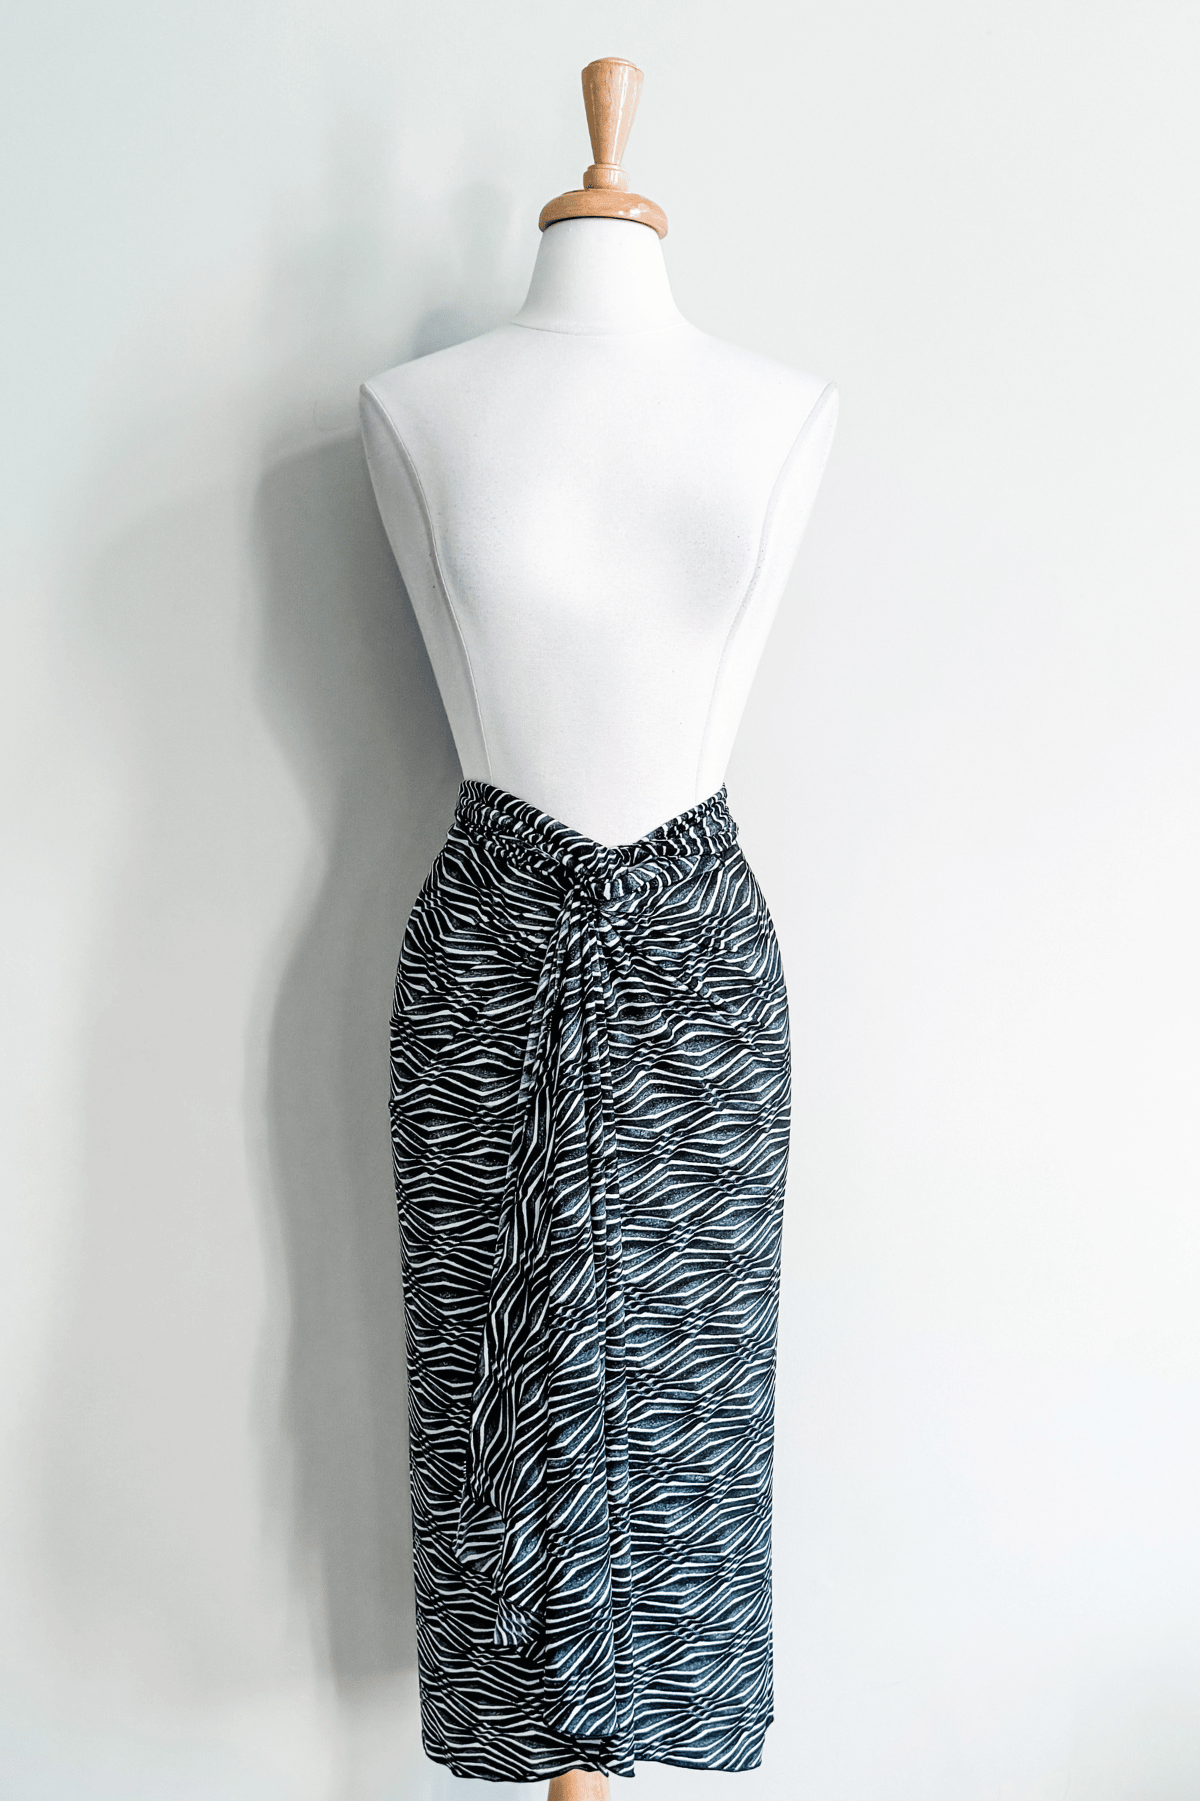 Short Goddess Dress in Charcoal Ikat Print